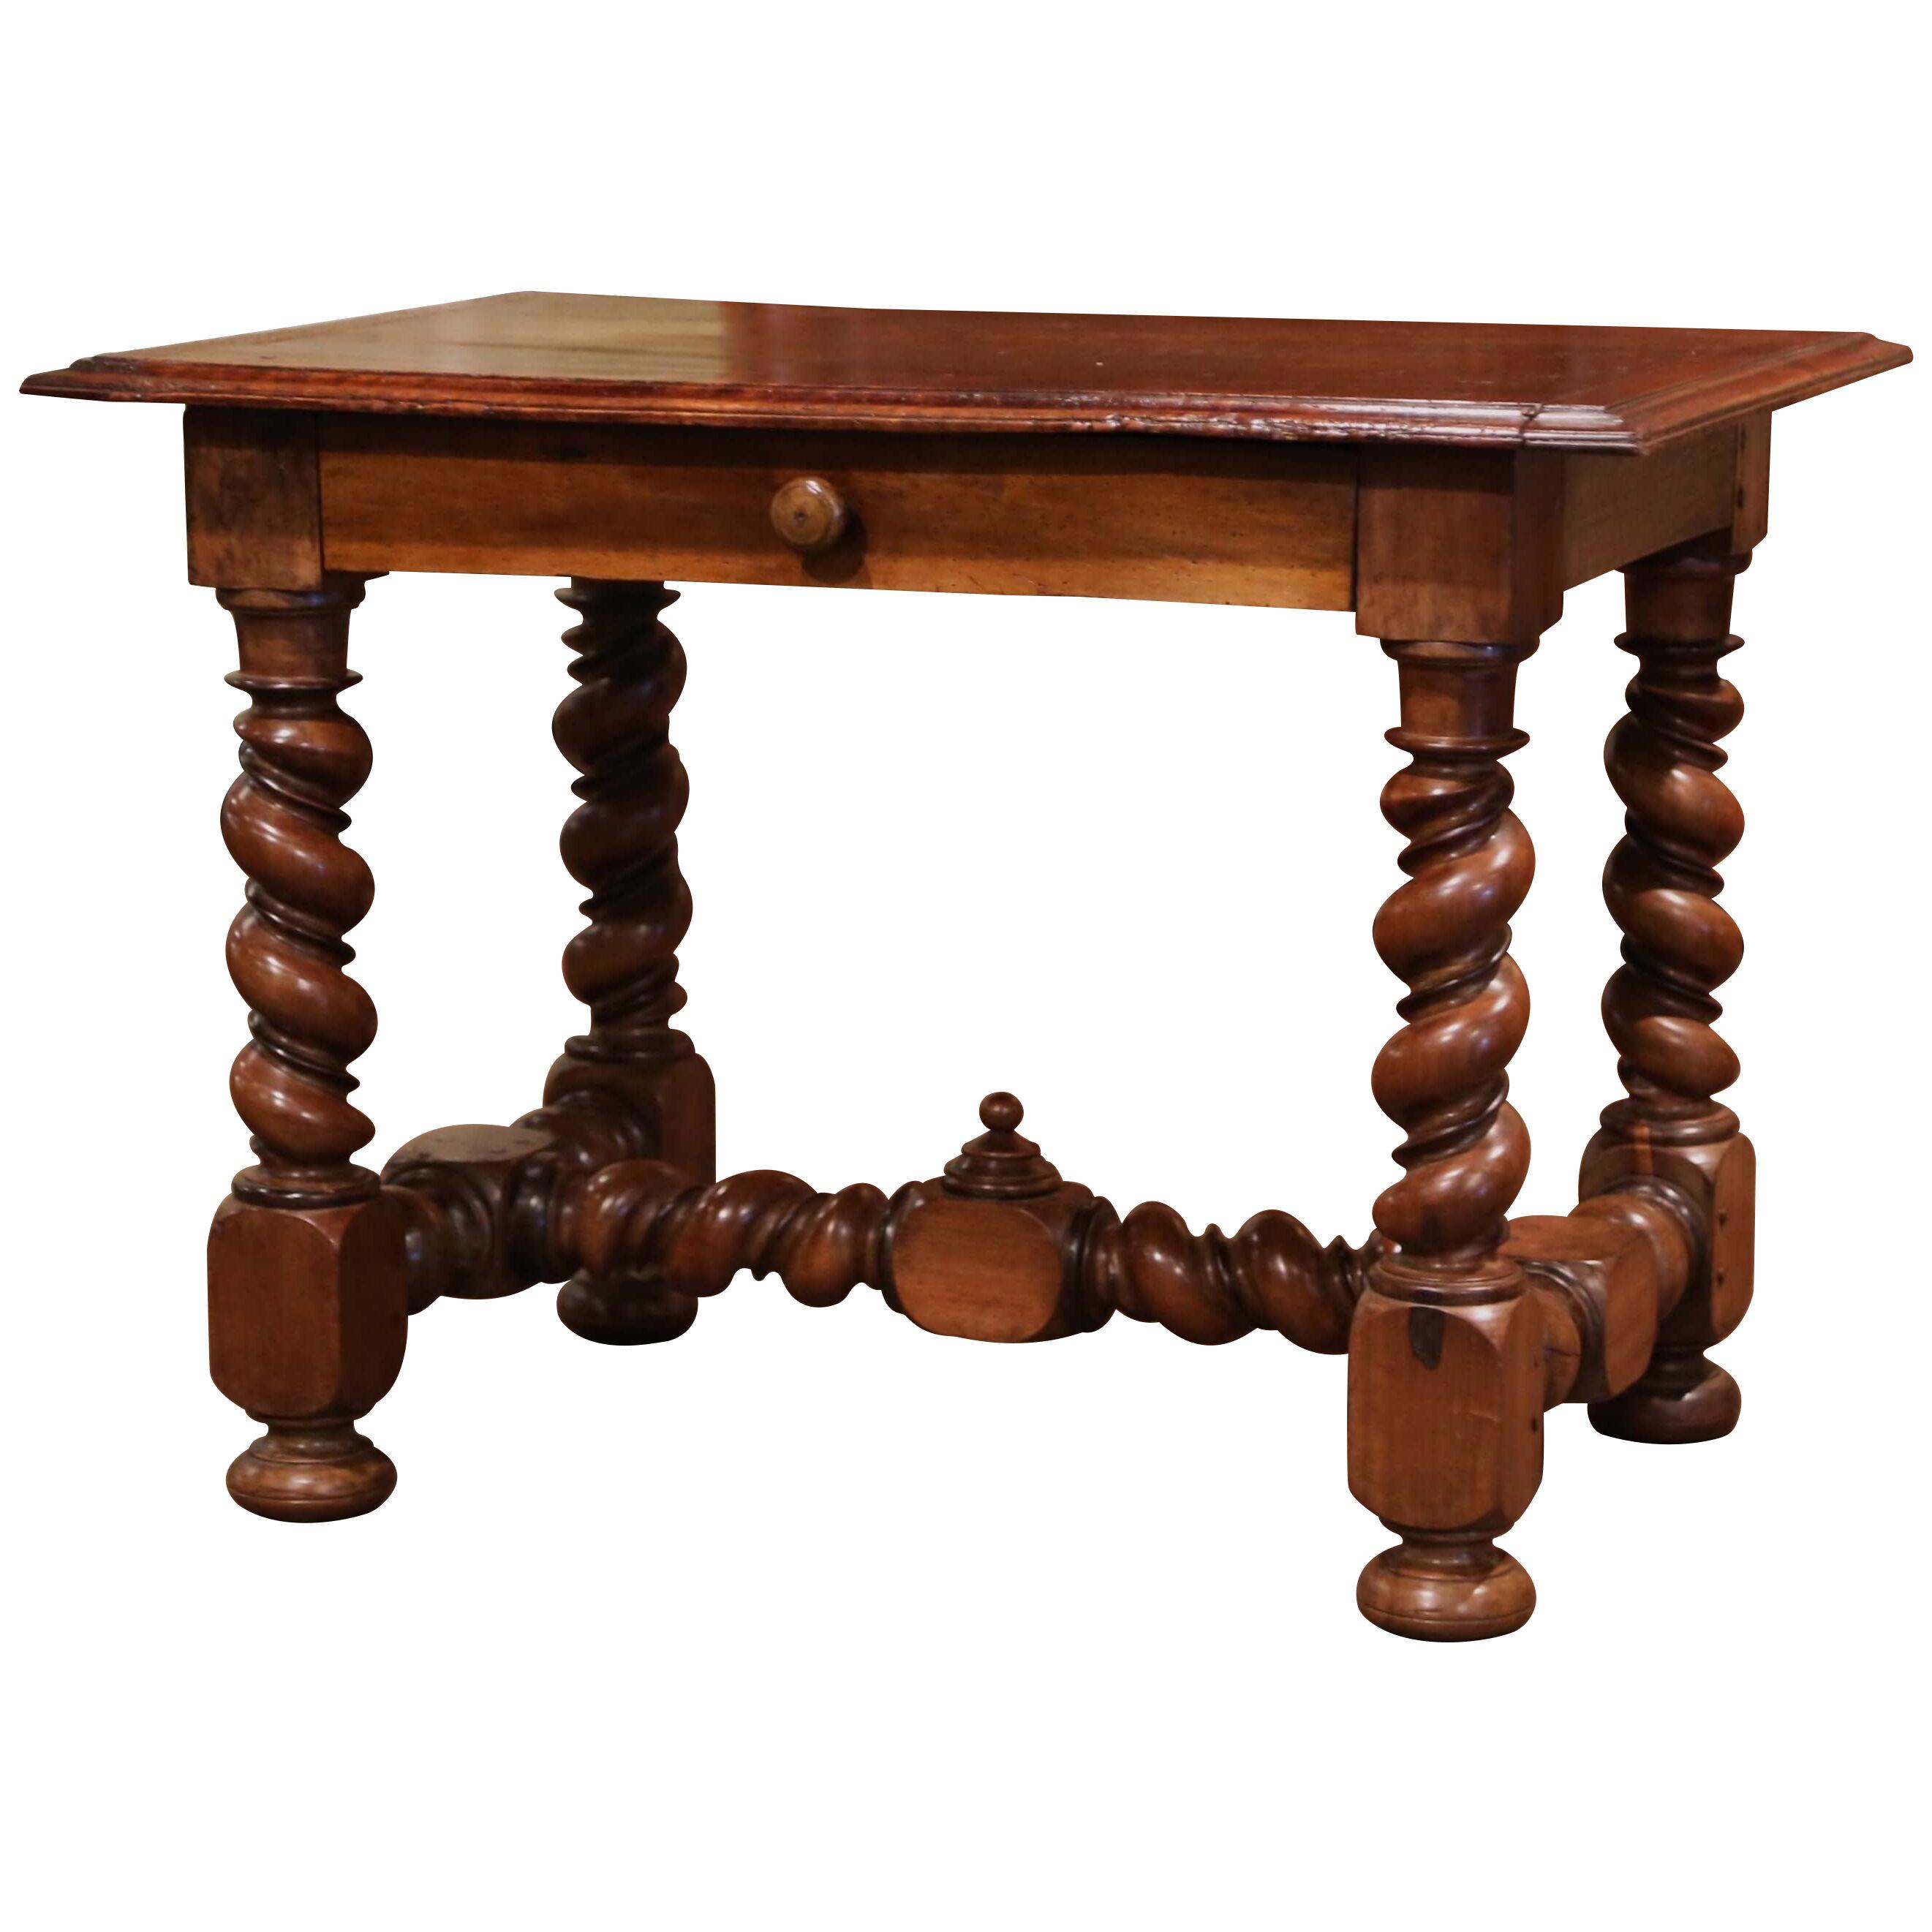 Mid-19th Century, French, Louis XIII Carved Walnut Barley Twist Table Desk